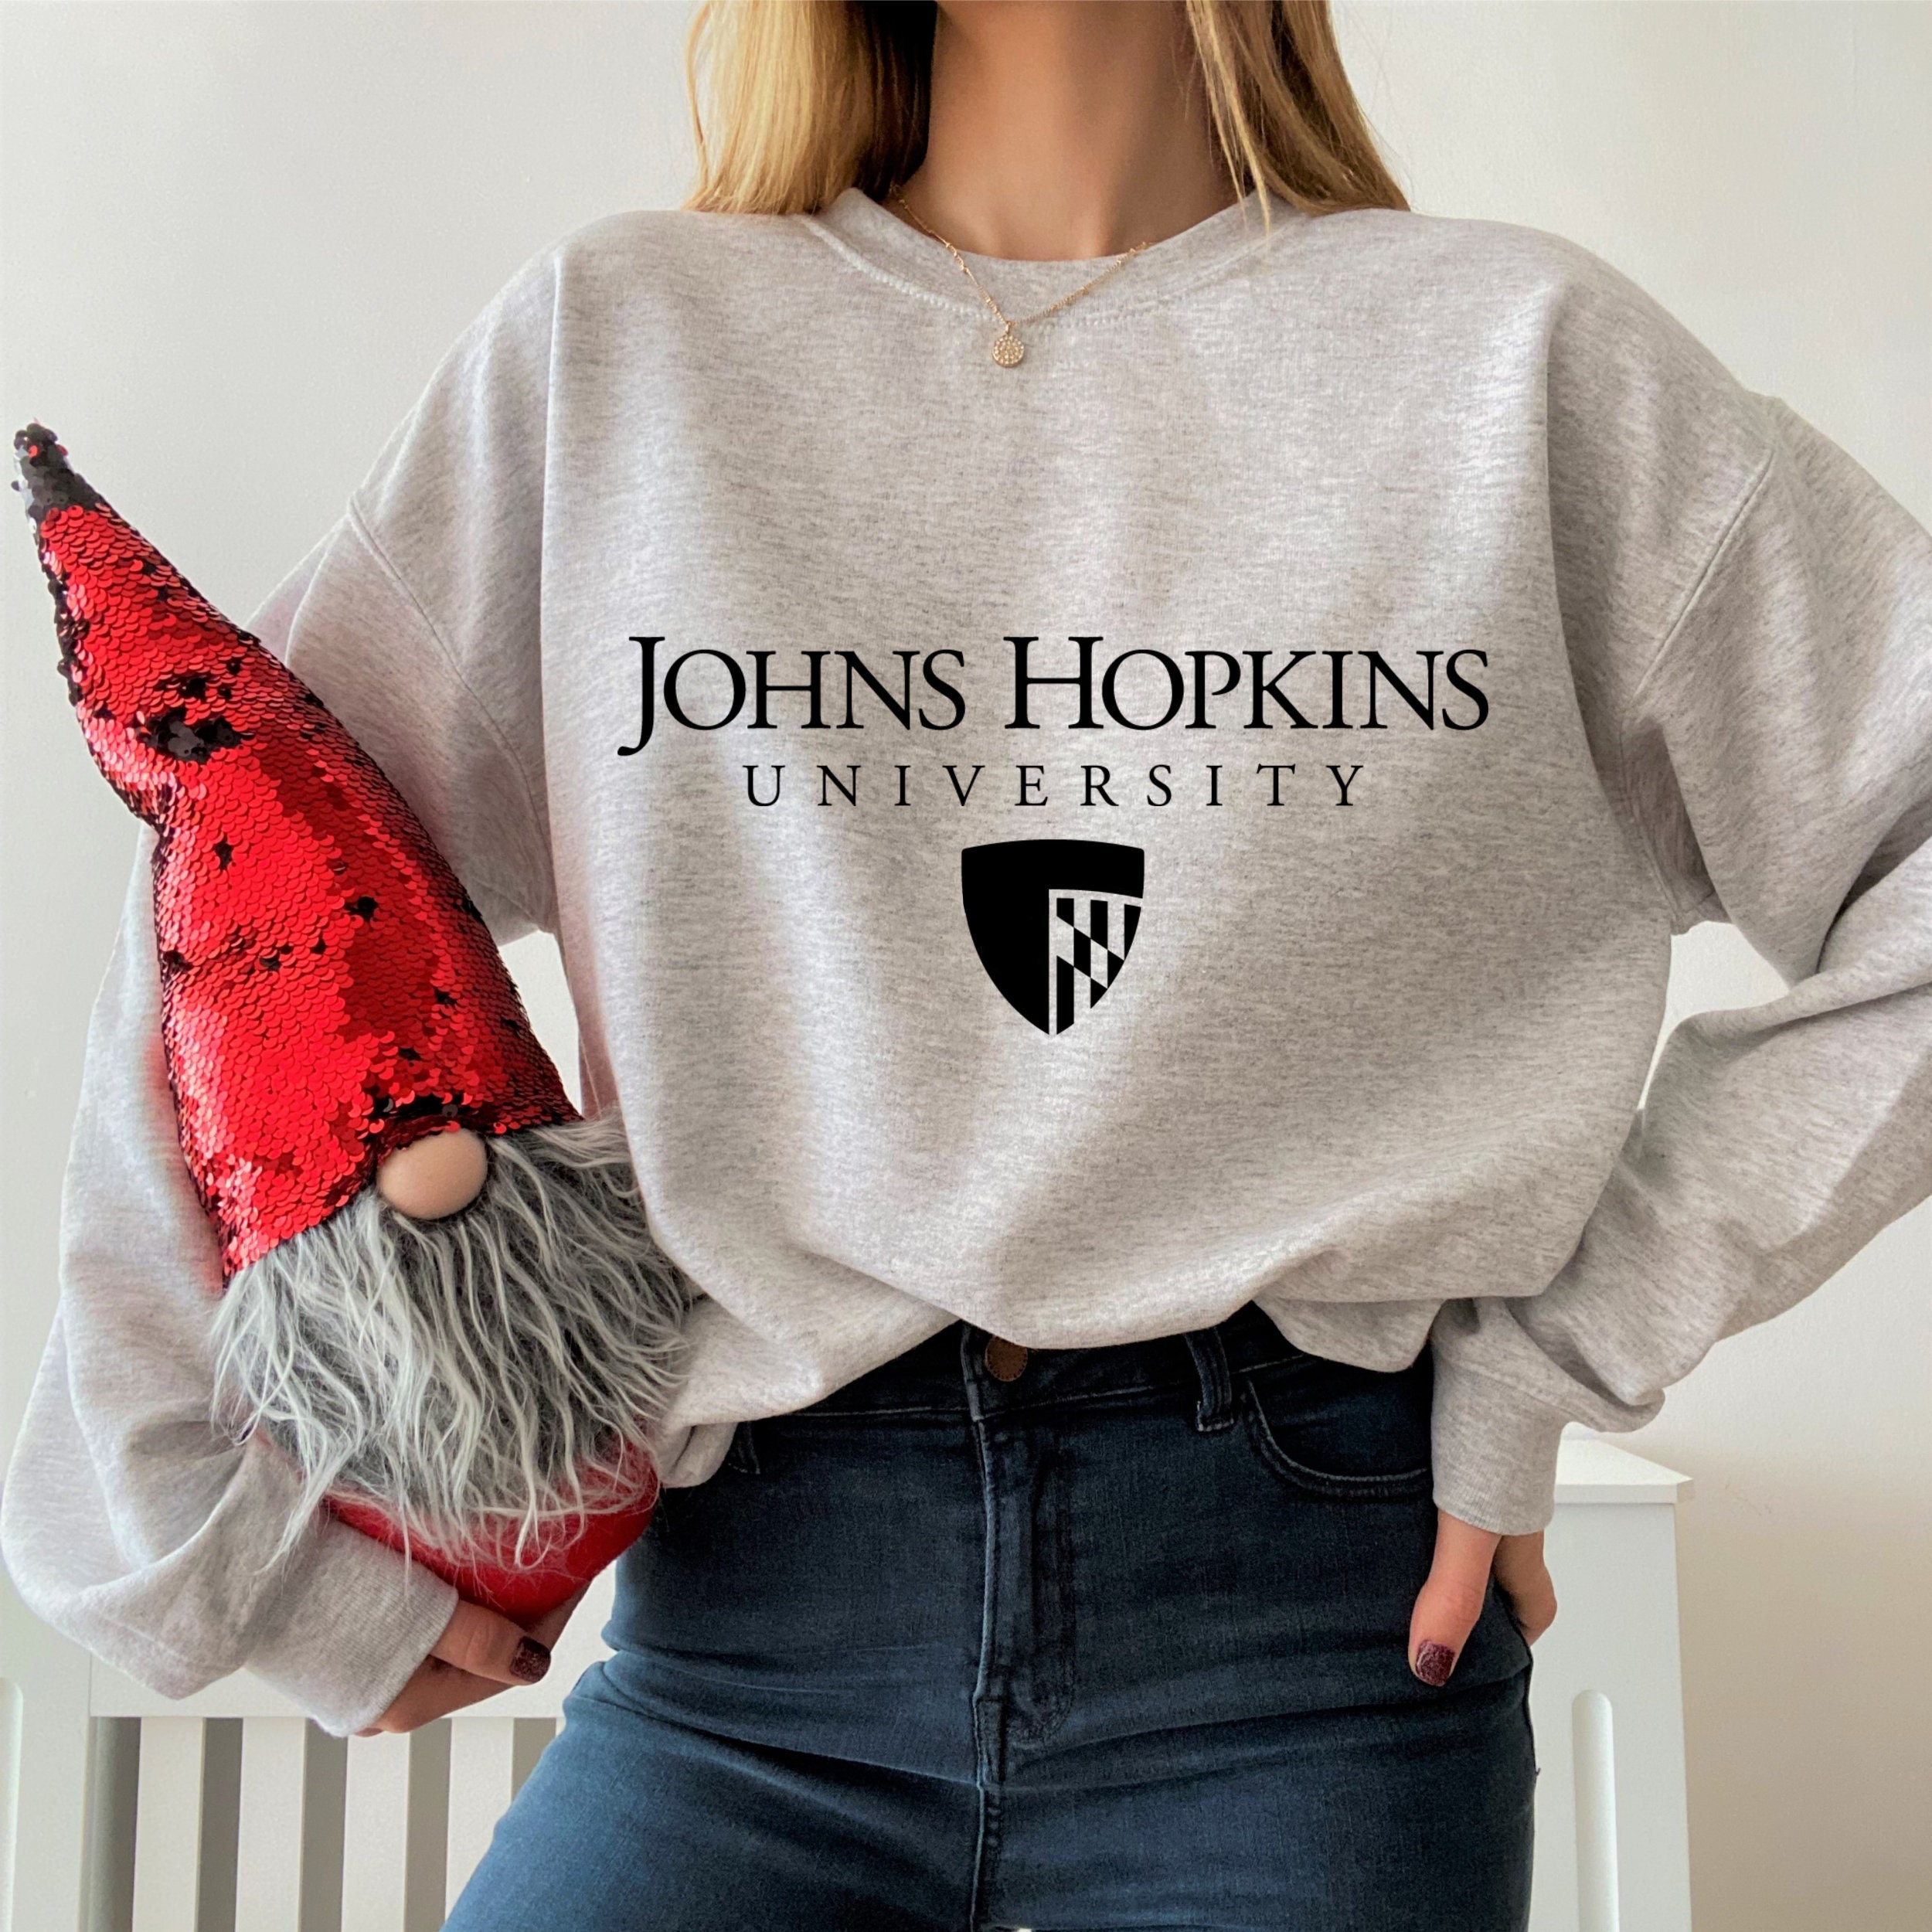 Johns Hopkins University Baby Clothing, Gifts & Fan Gear, Baby